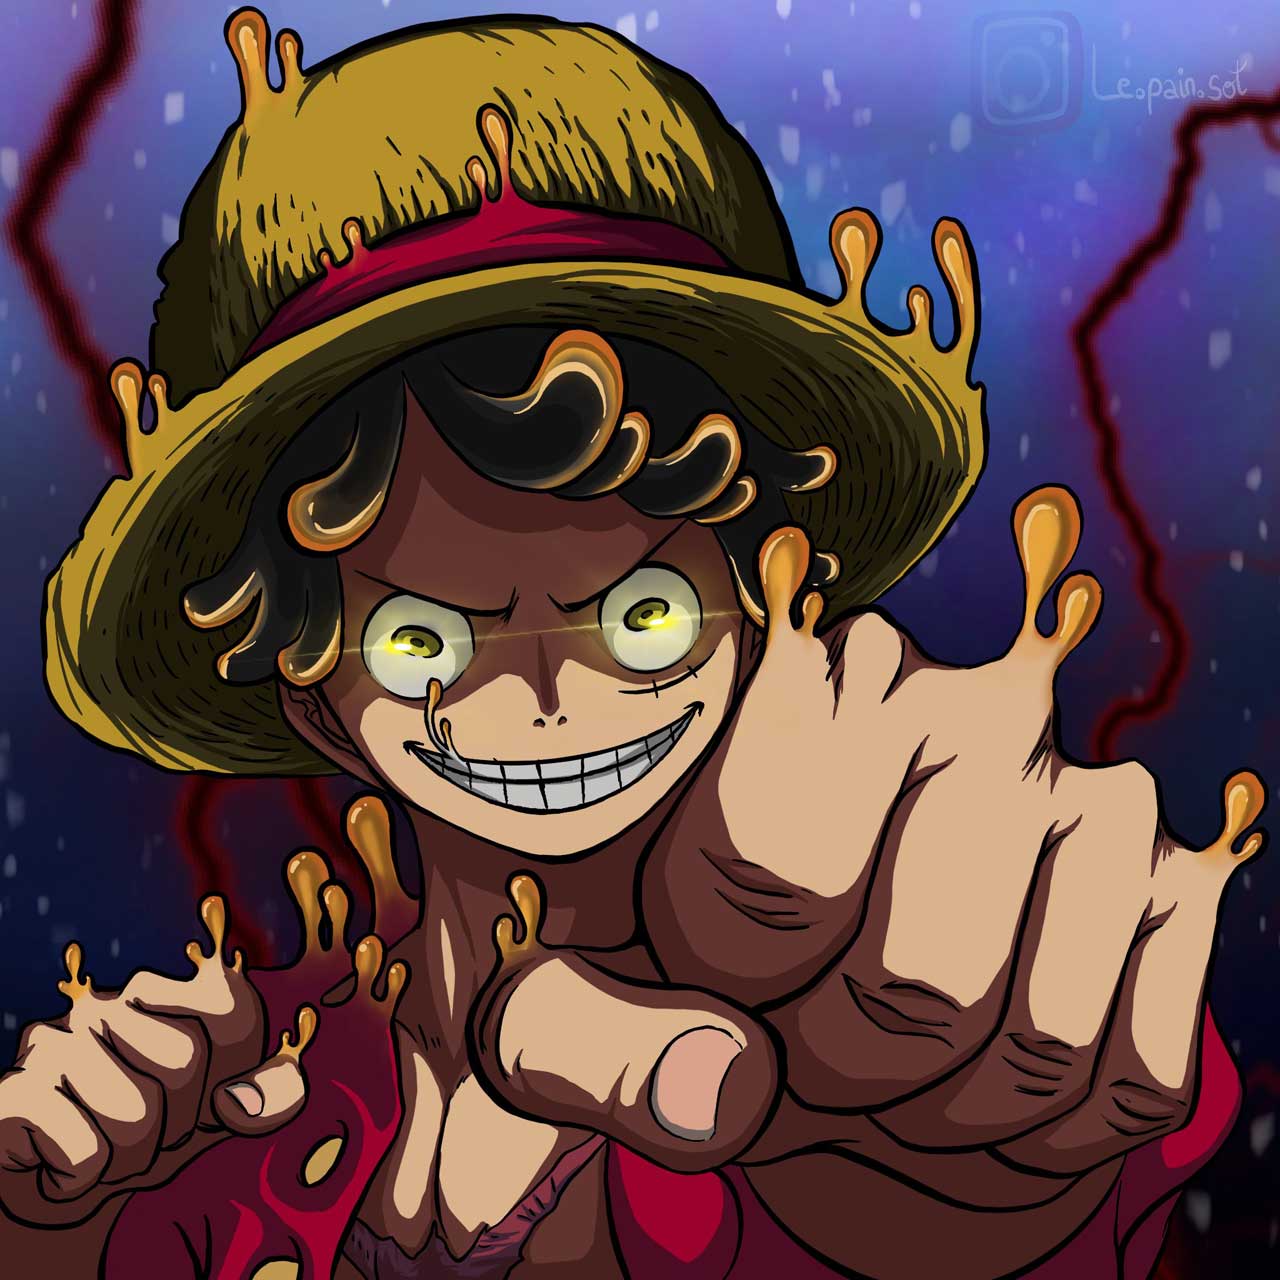 One Piece | Fanart do despertar/Gear 5 de Luffy por Le_pain_sot